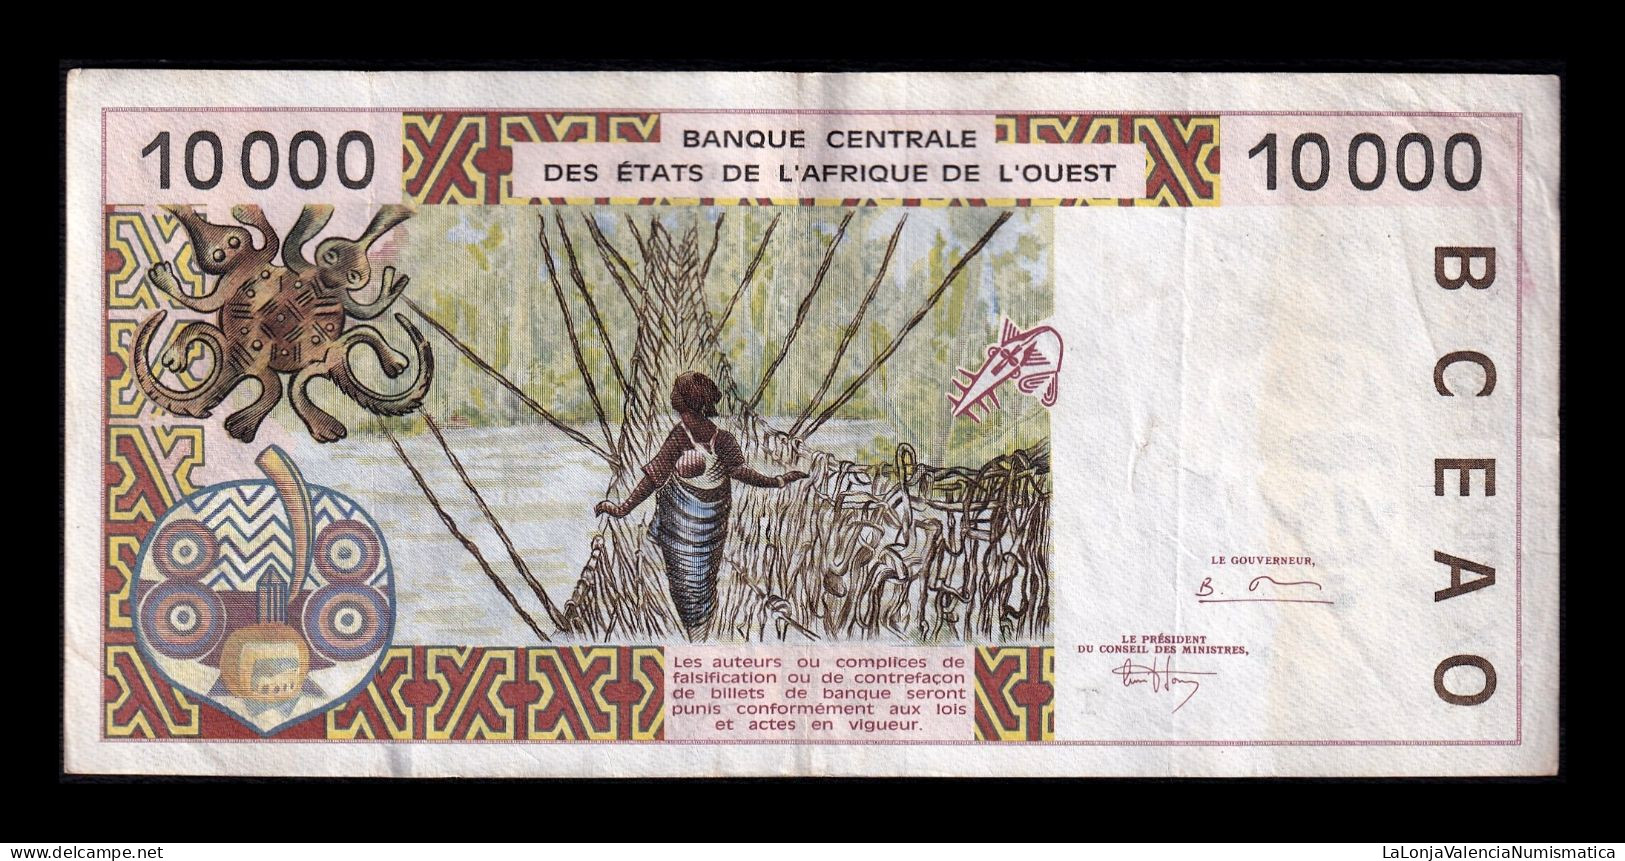 West African St. Togo 10000 Francs 1995 Pick 814Tc Mbc Vf - Togo